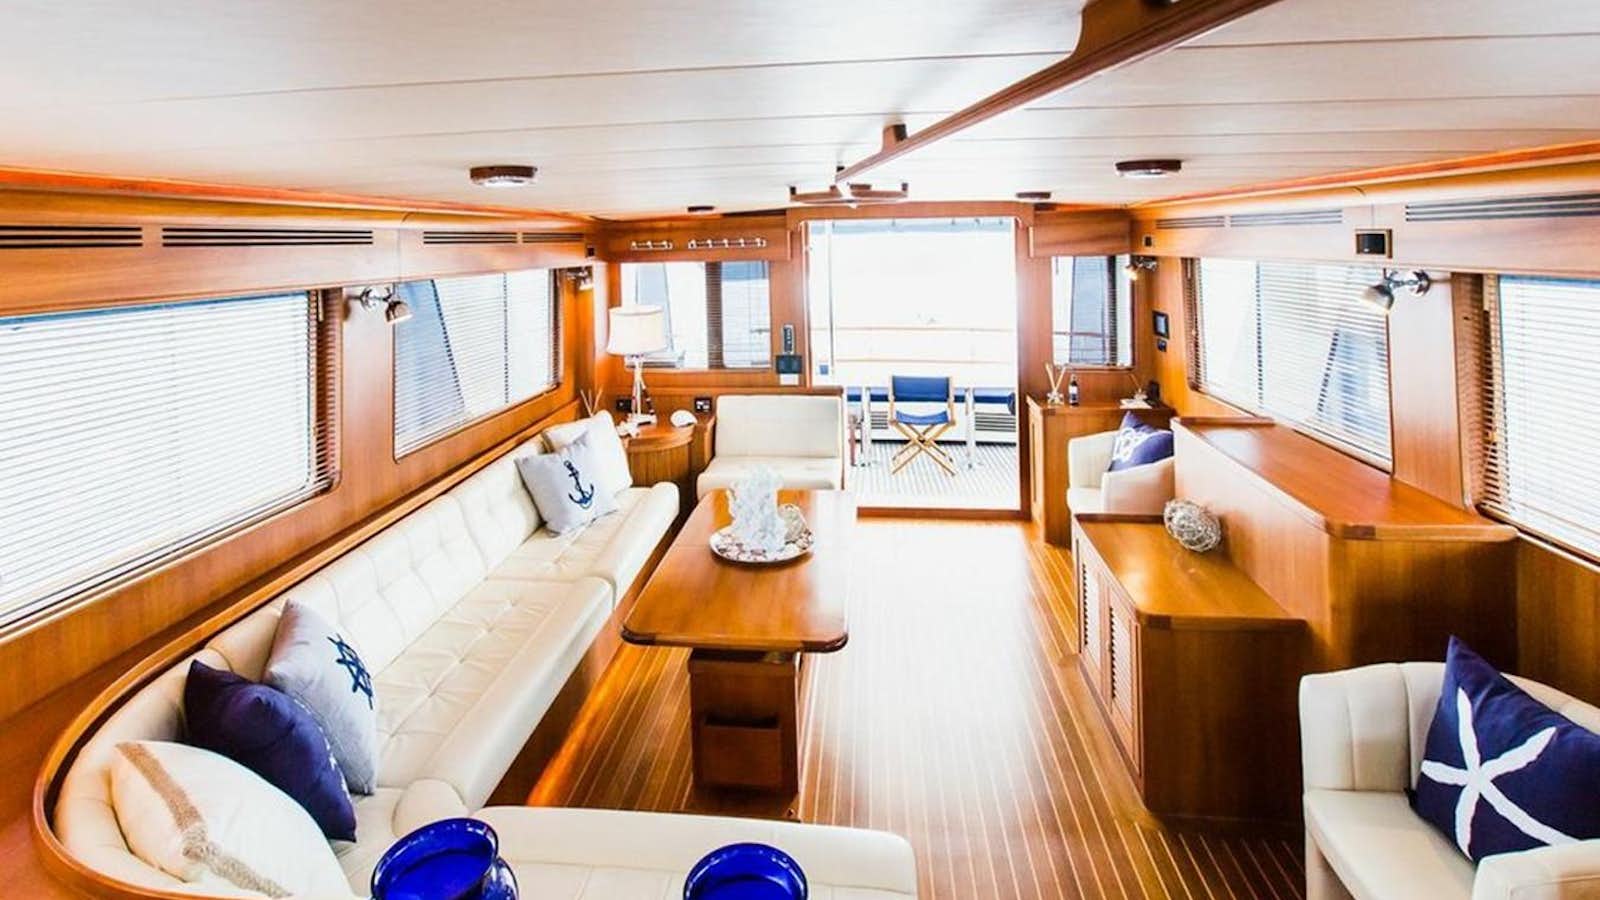 72' marlow raised pilothouse motor explorer i
Yacht for Sale